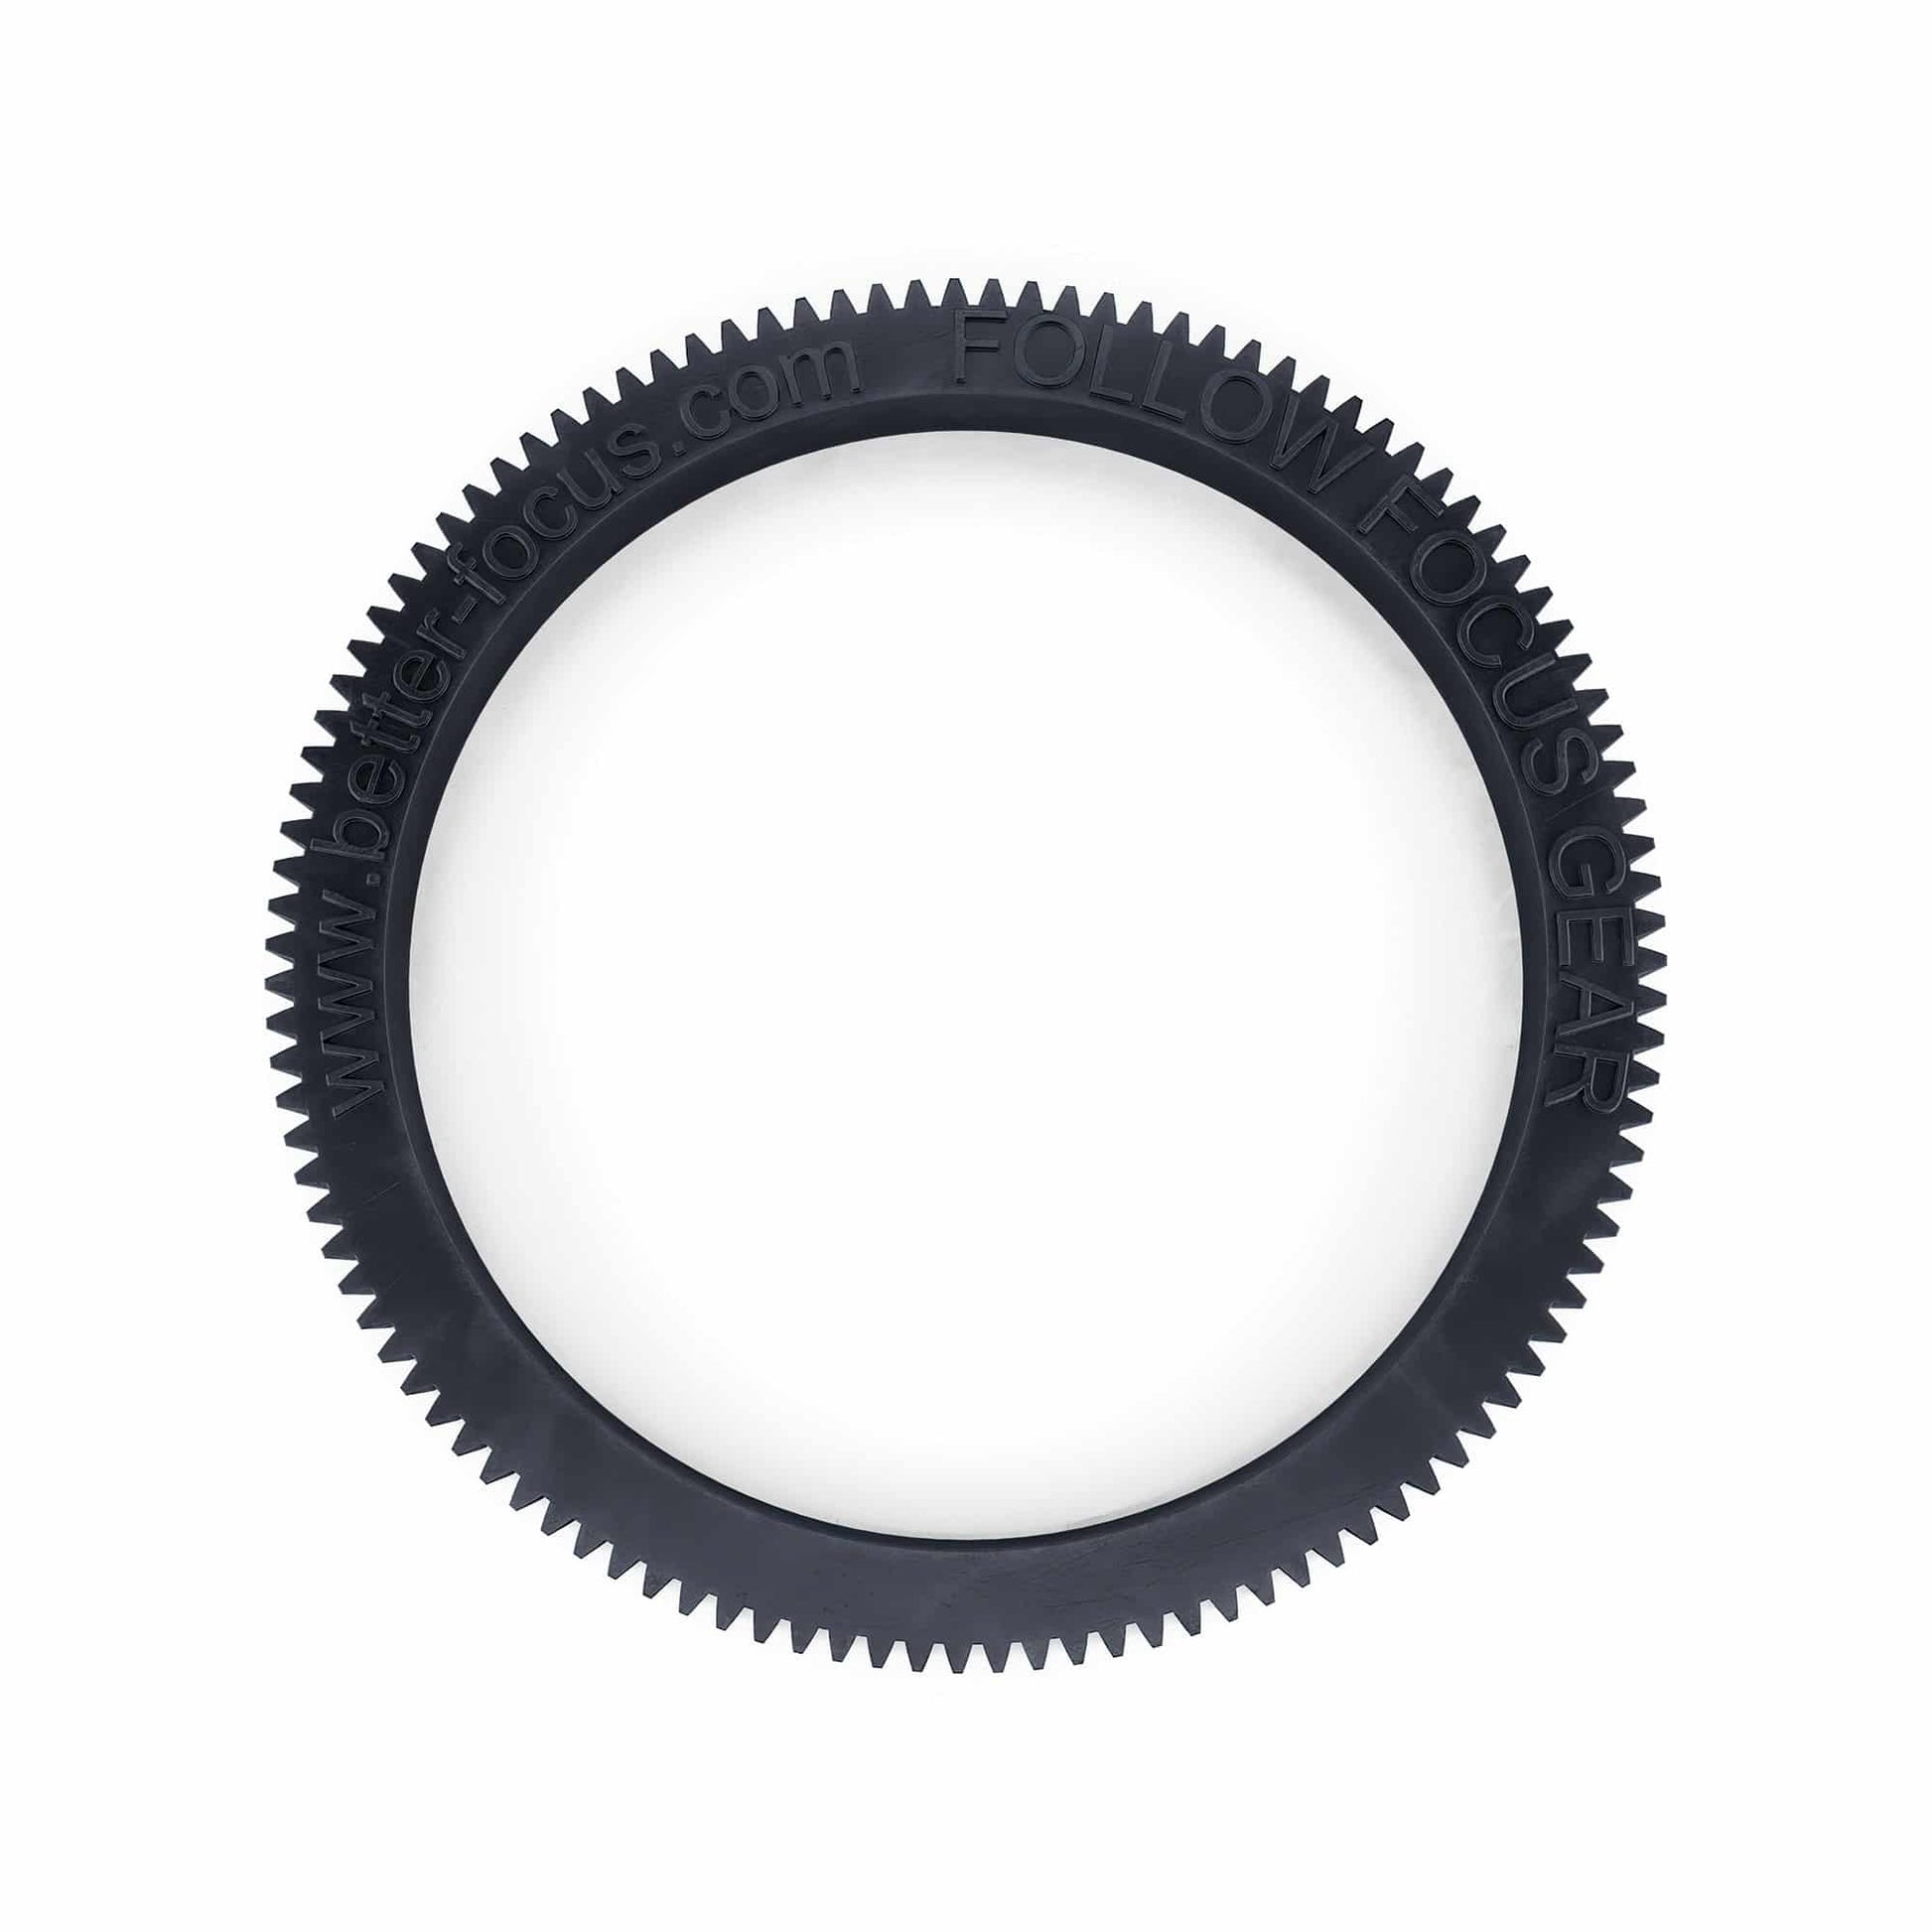 Follow Focus Gear for ZEISS OTUS 100MM F1.4 EF  lens